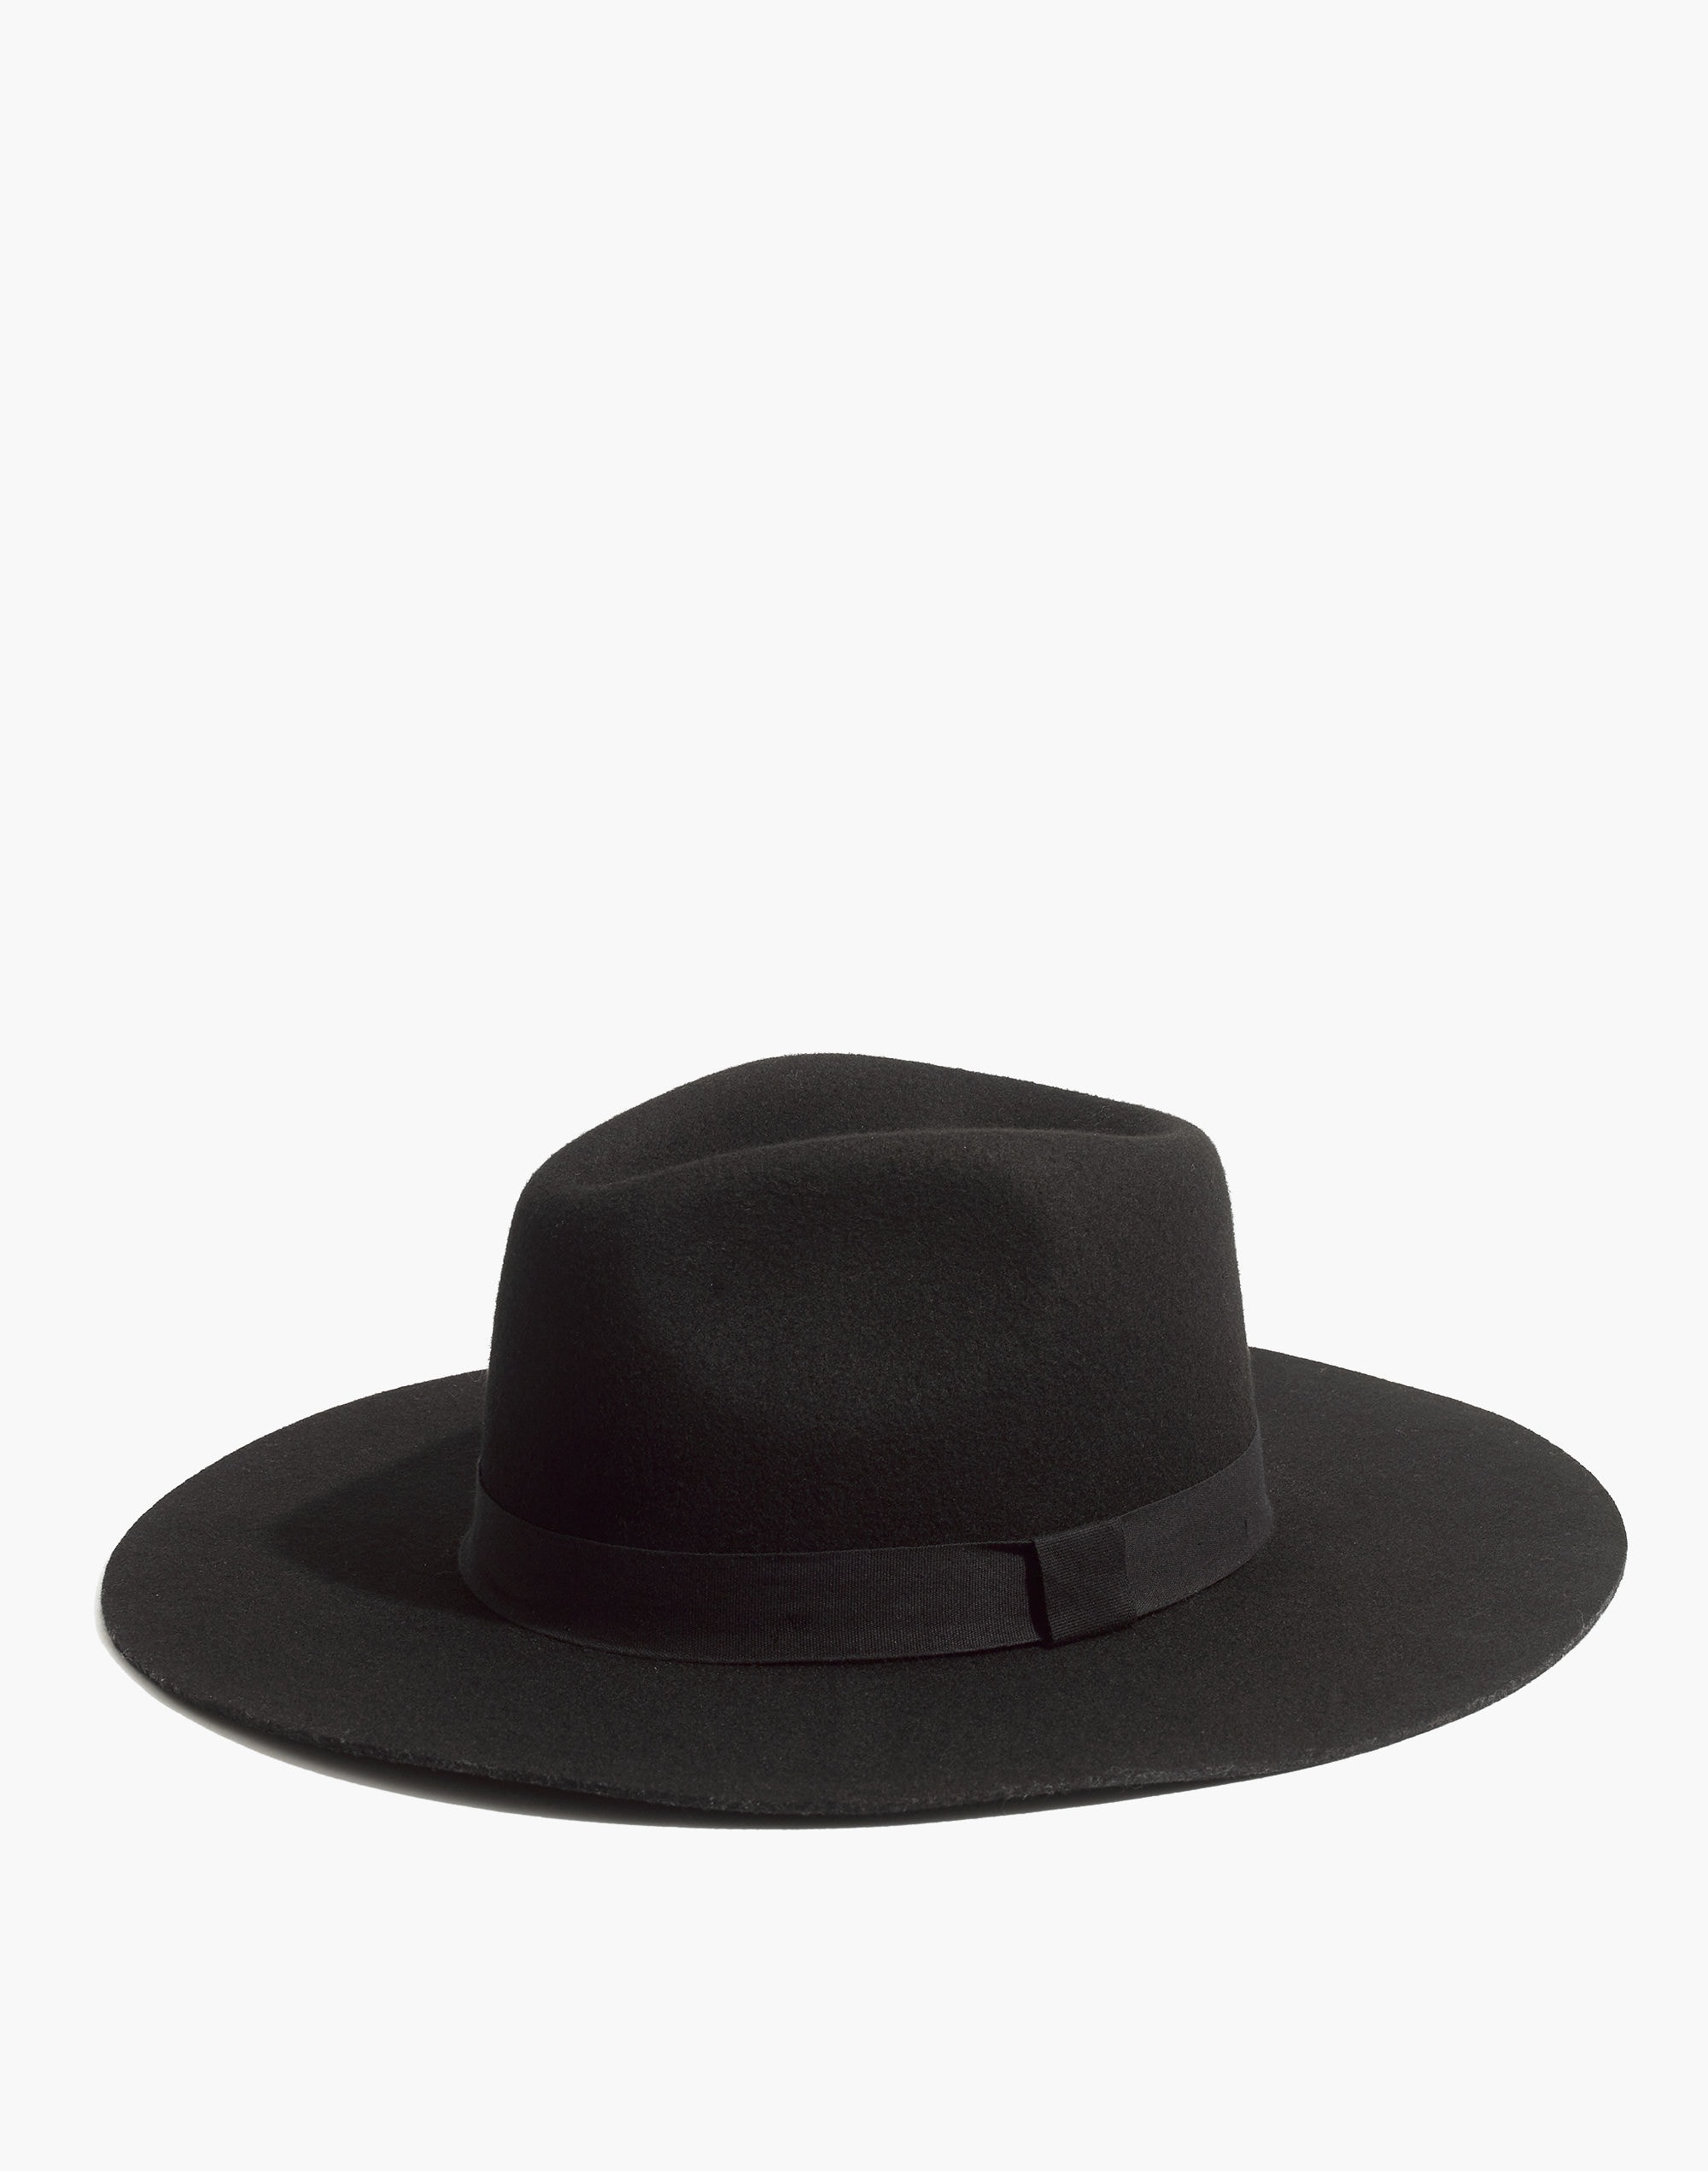 Madewell x Biltmore® Montana Felt Hat